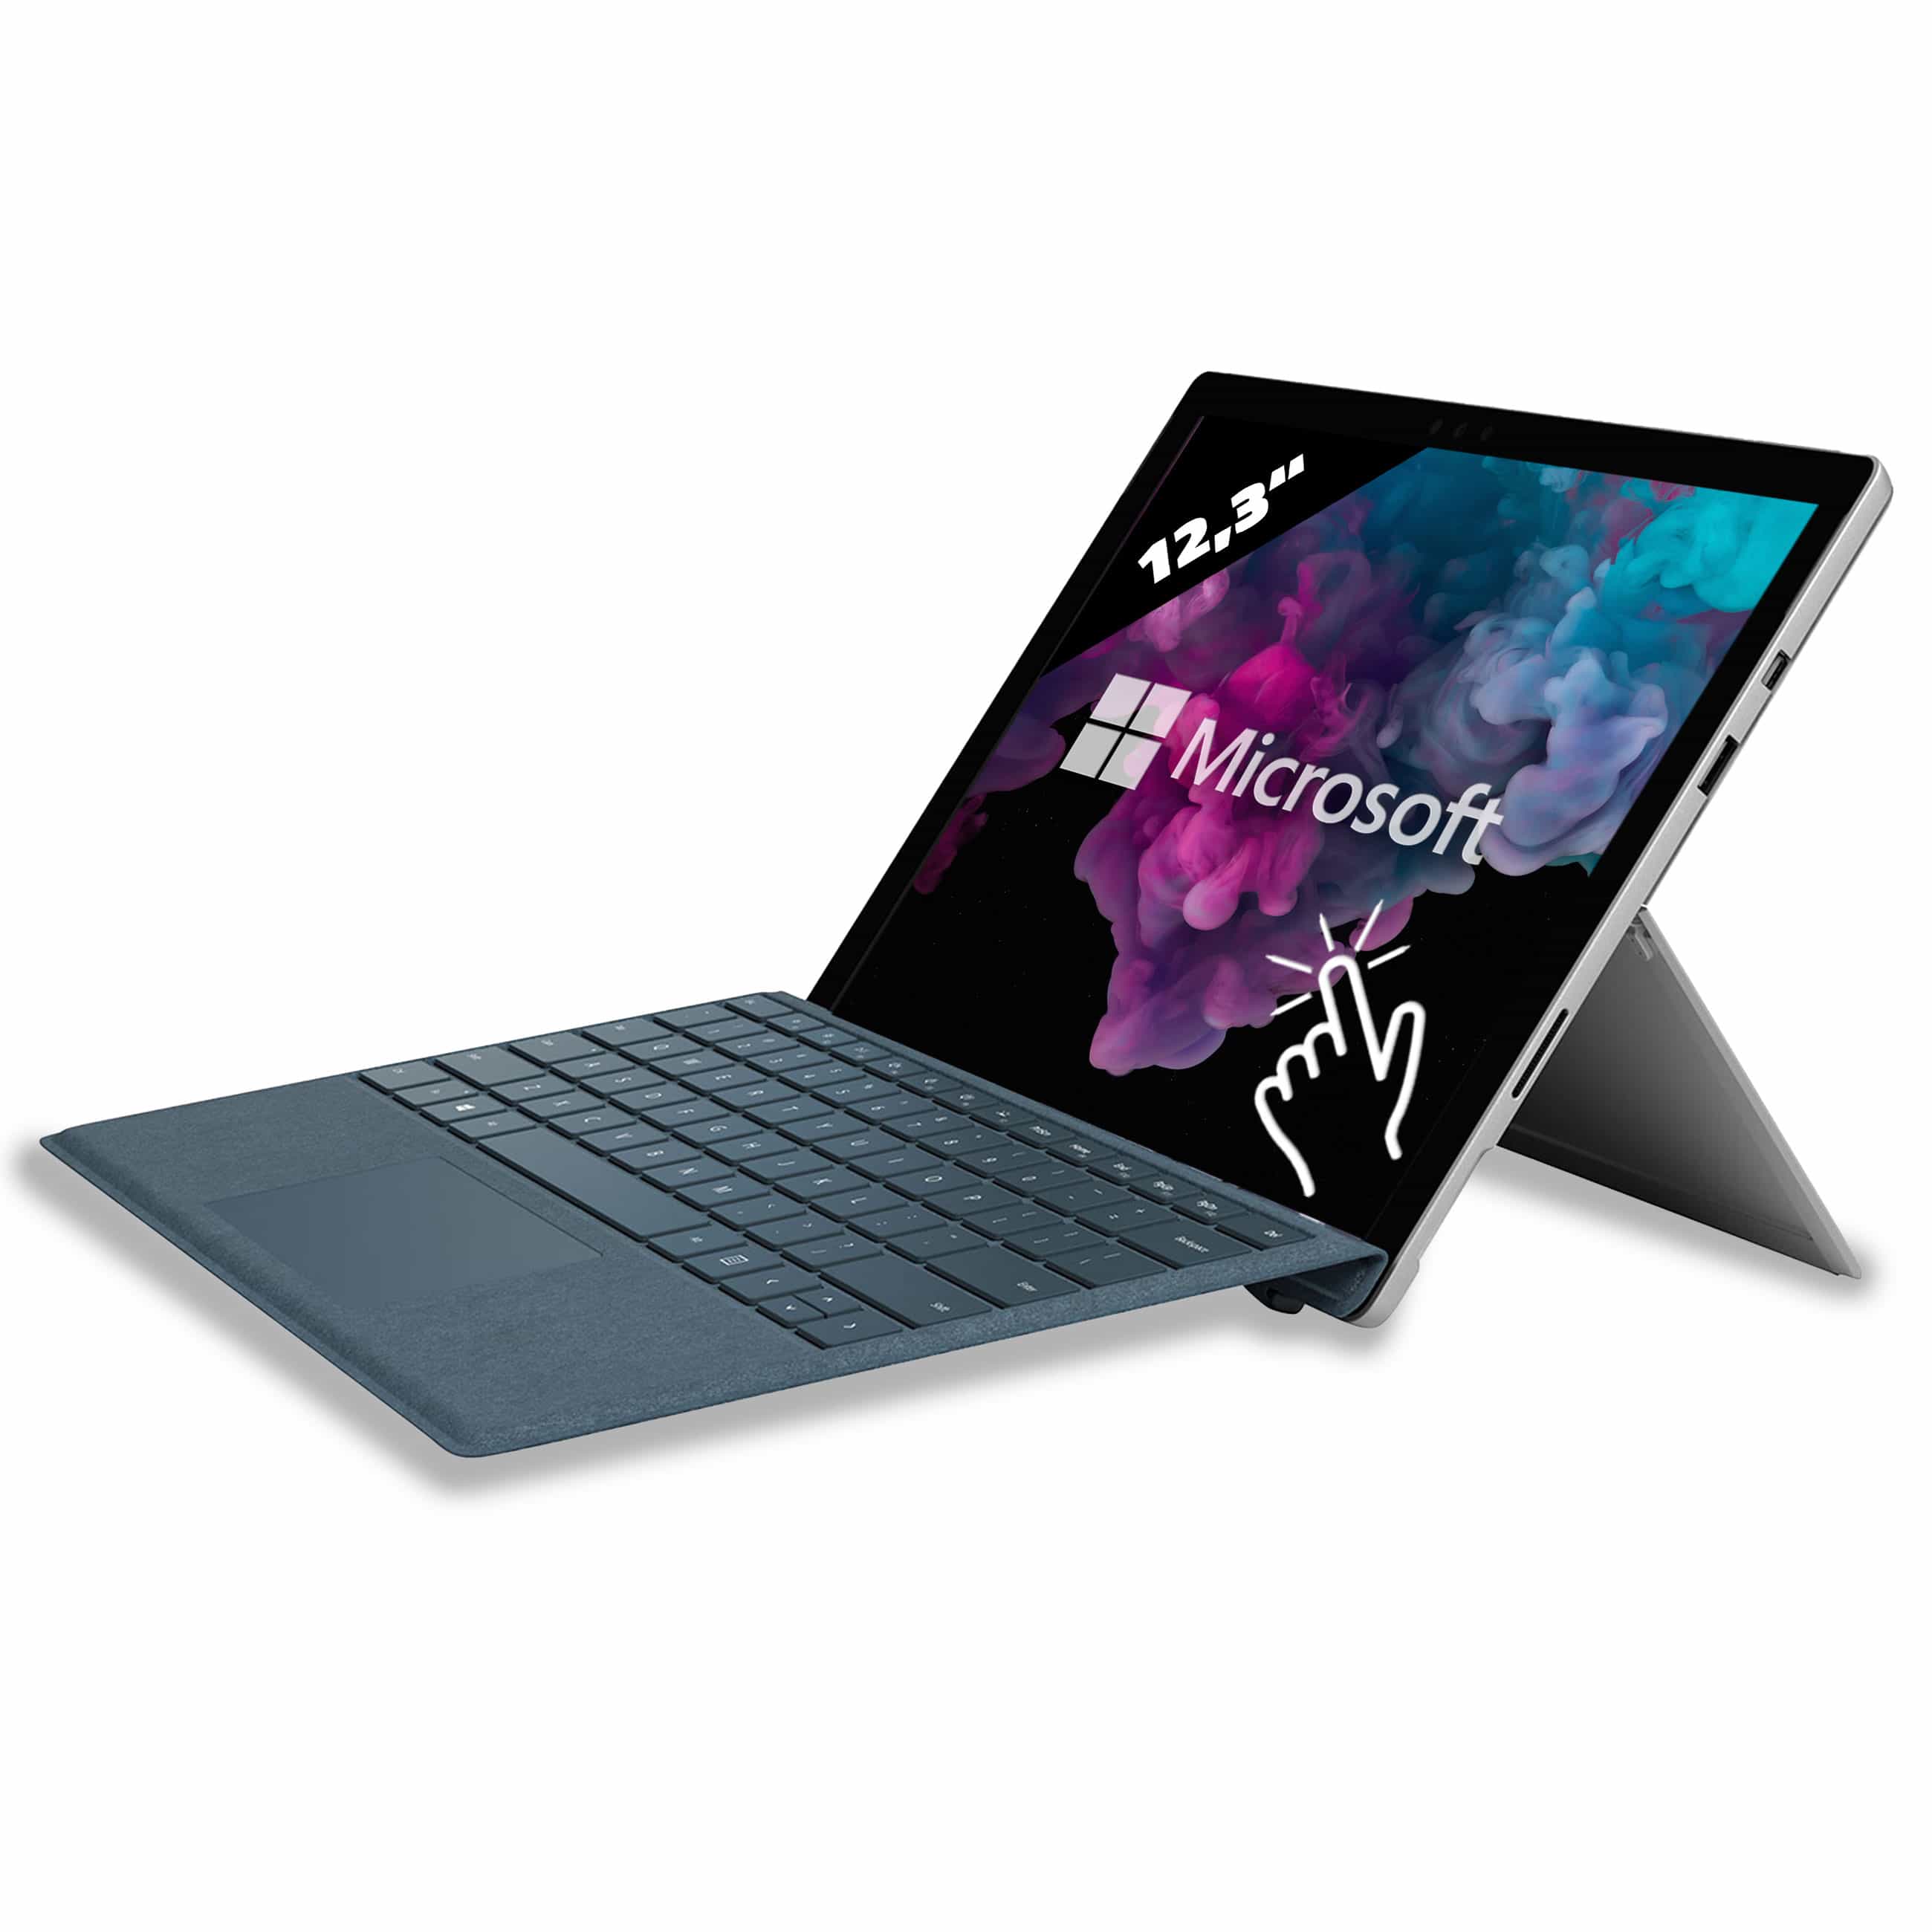 Microsoft Surface Pro 5Gut - AfB-refurbished